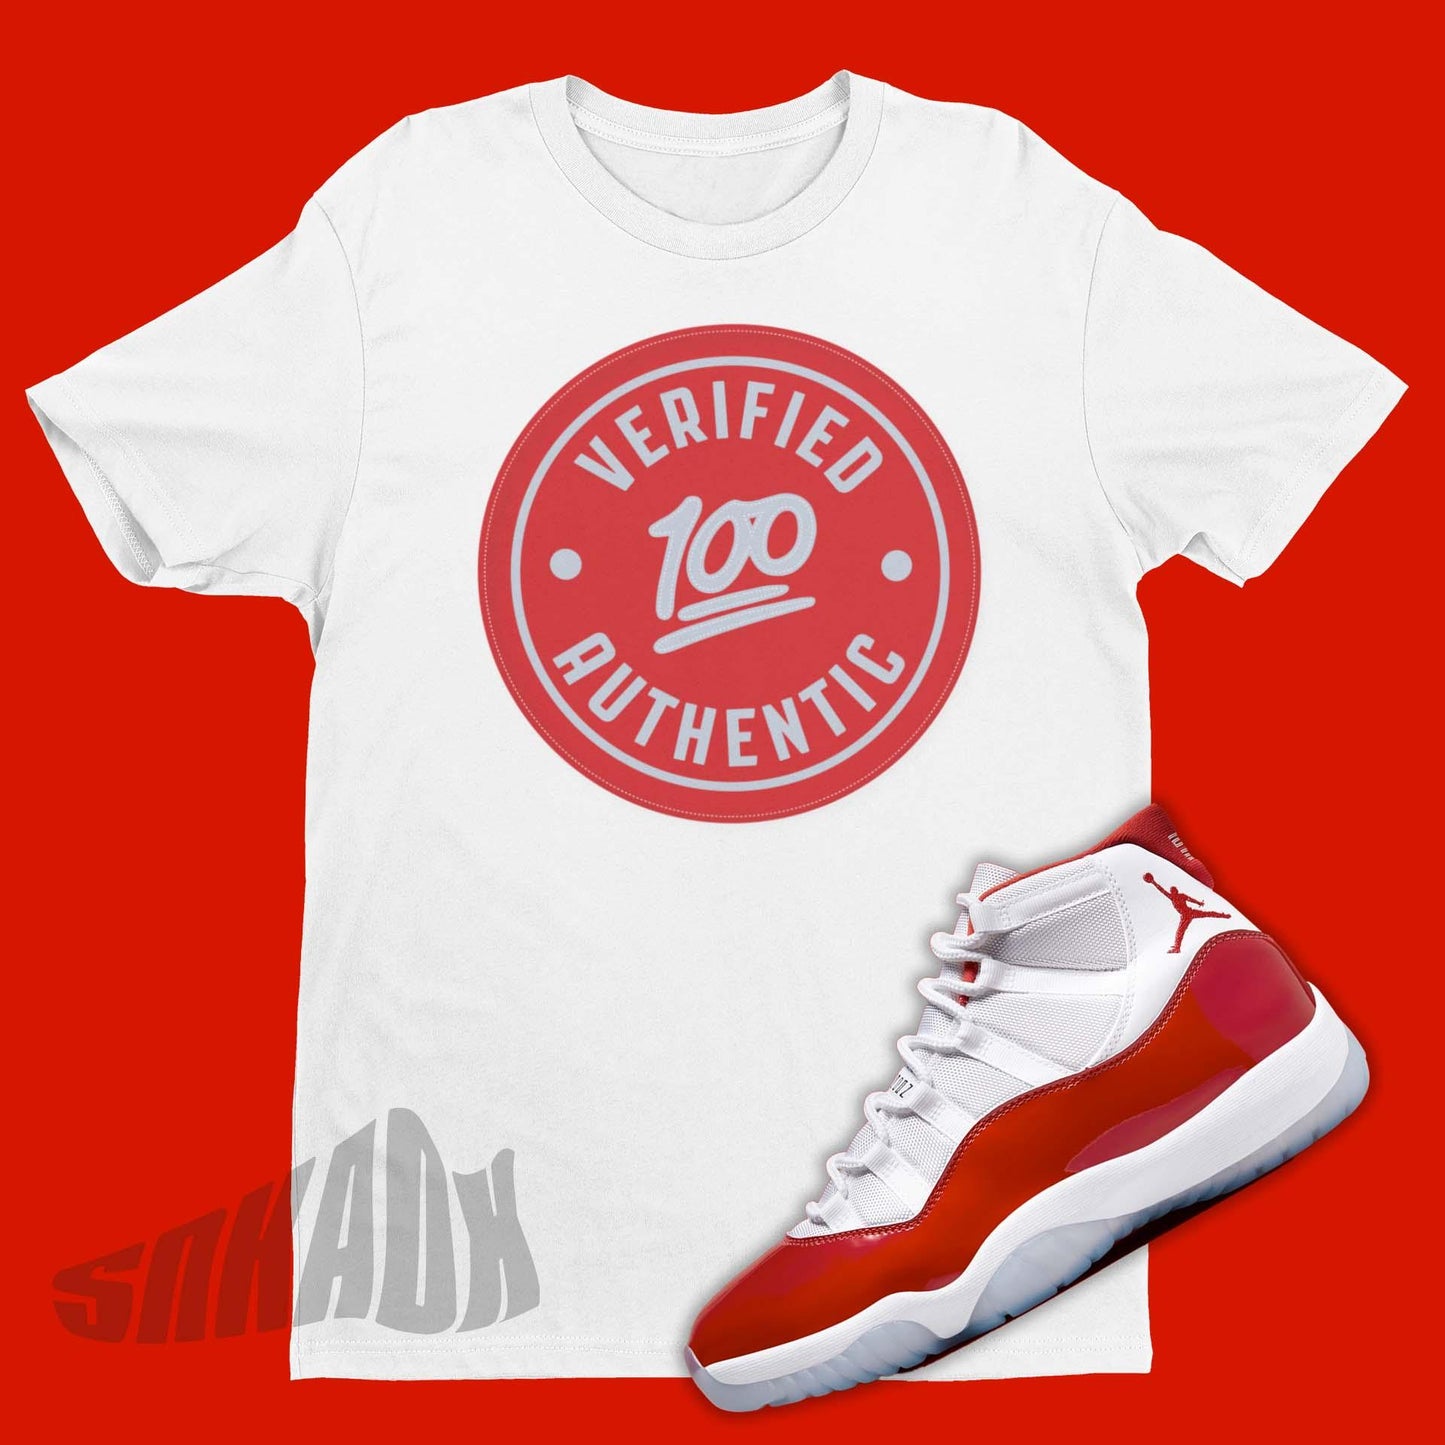 Verified Authentic Shirt To Match Air Jordan 11 Cherry - SNKADX